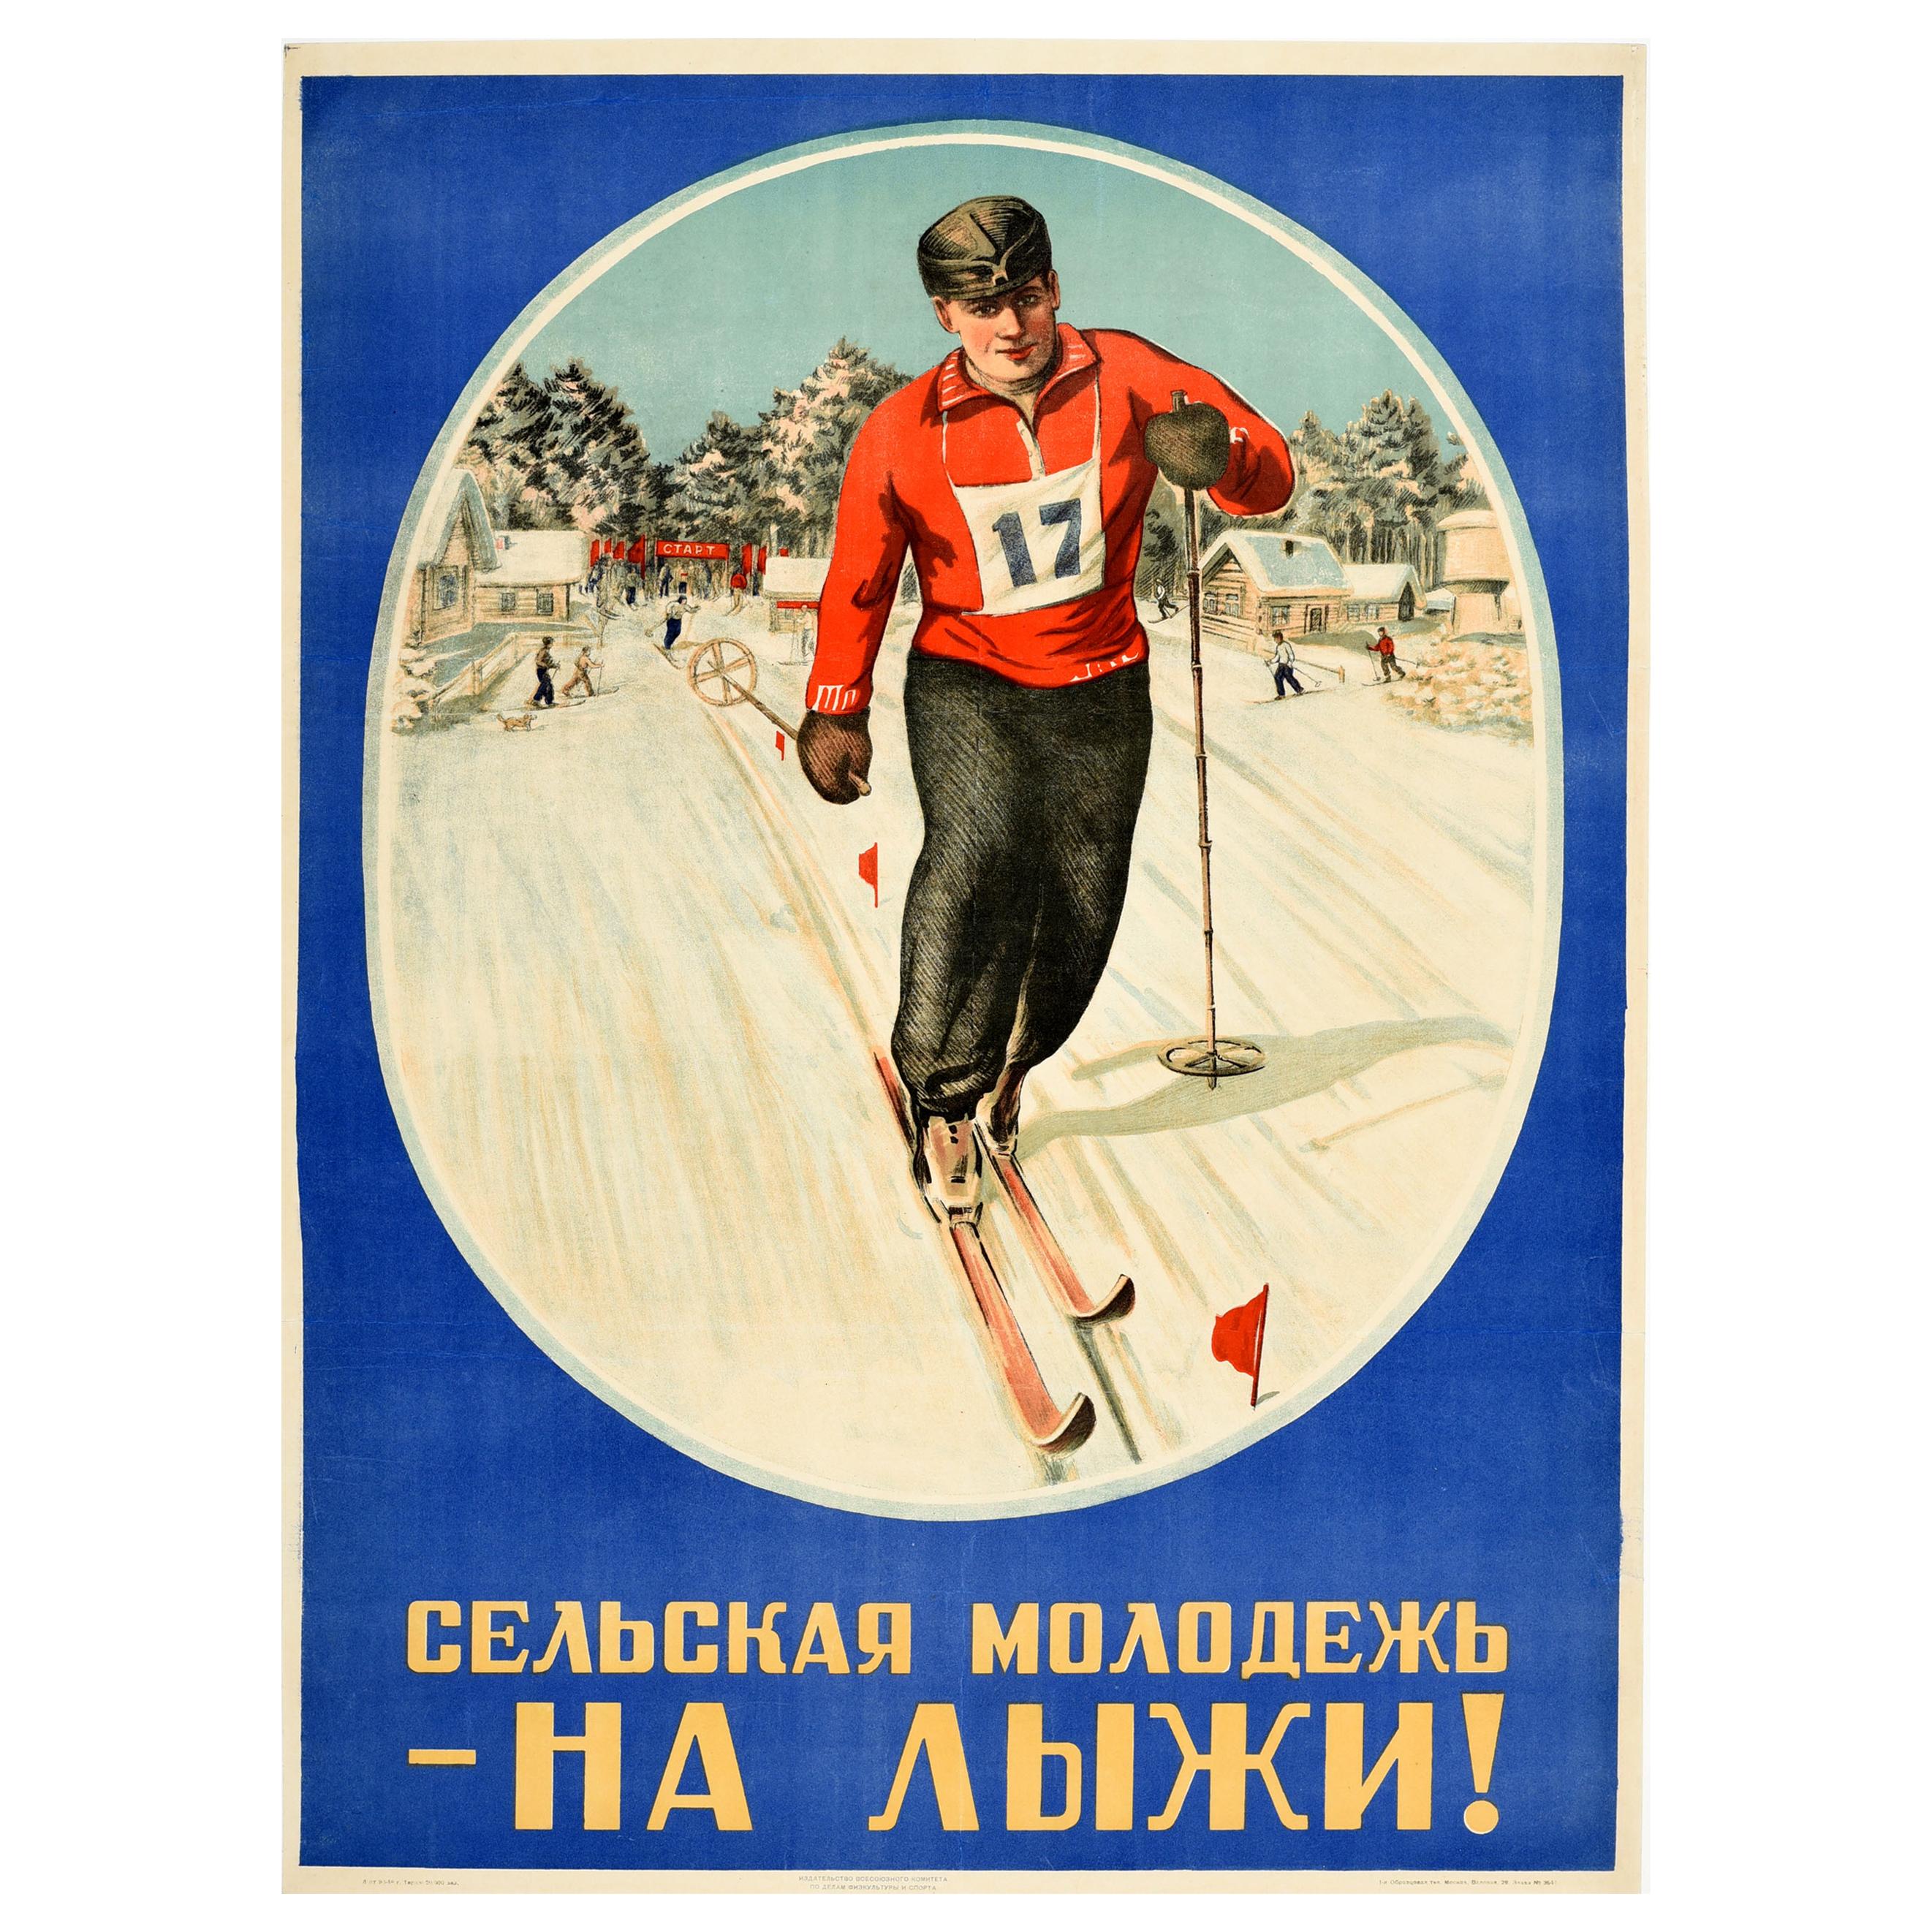 SKI VINTAGE POSTER original soviet movie poster